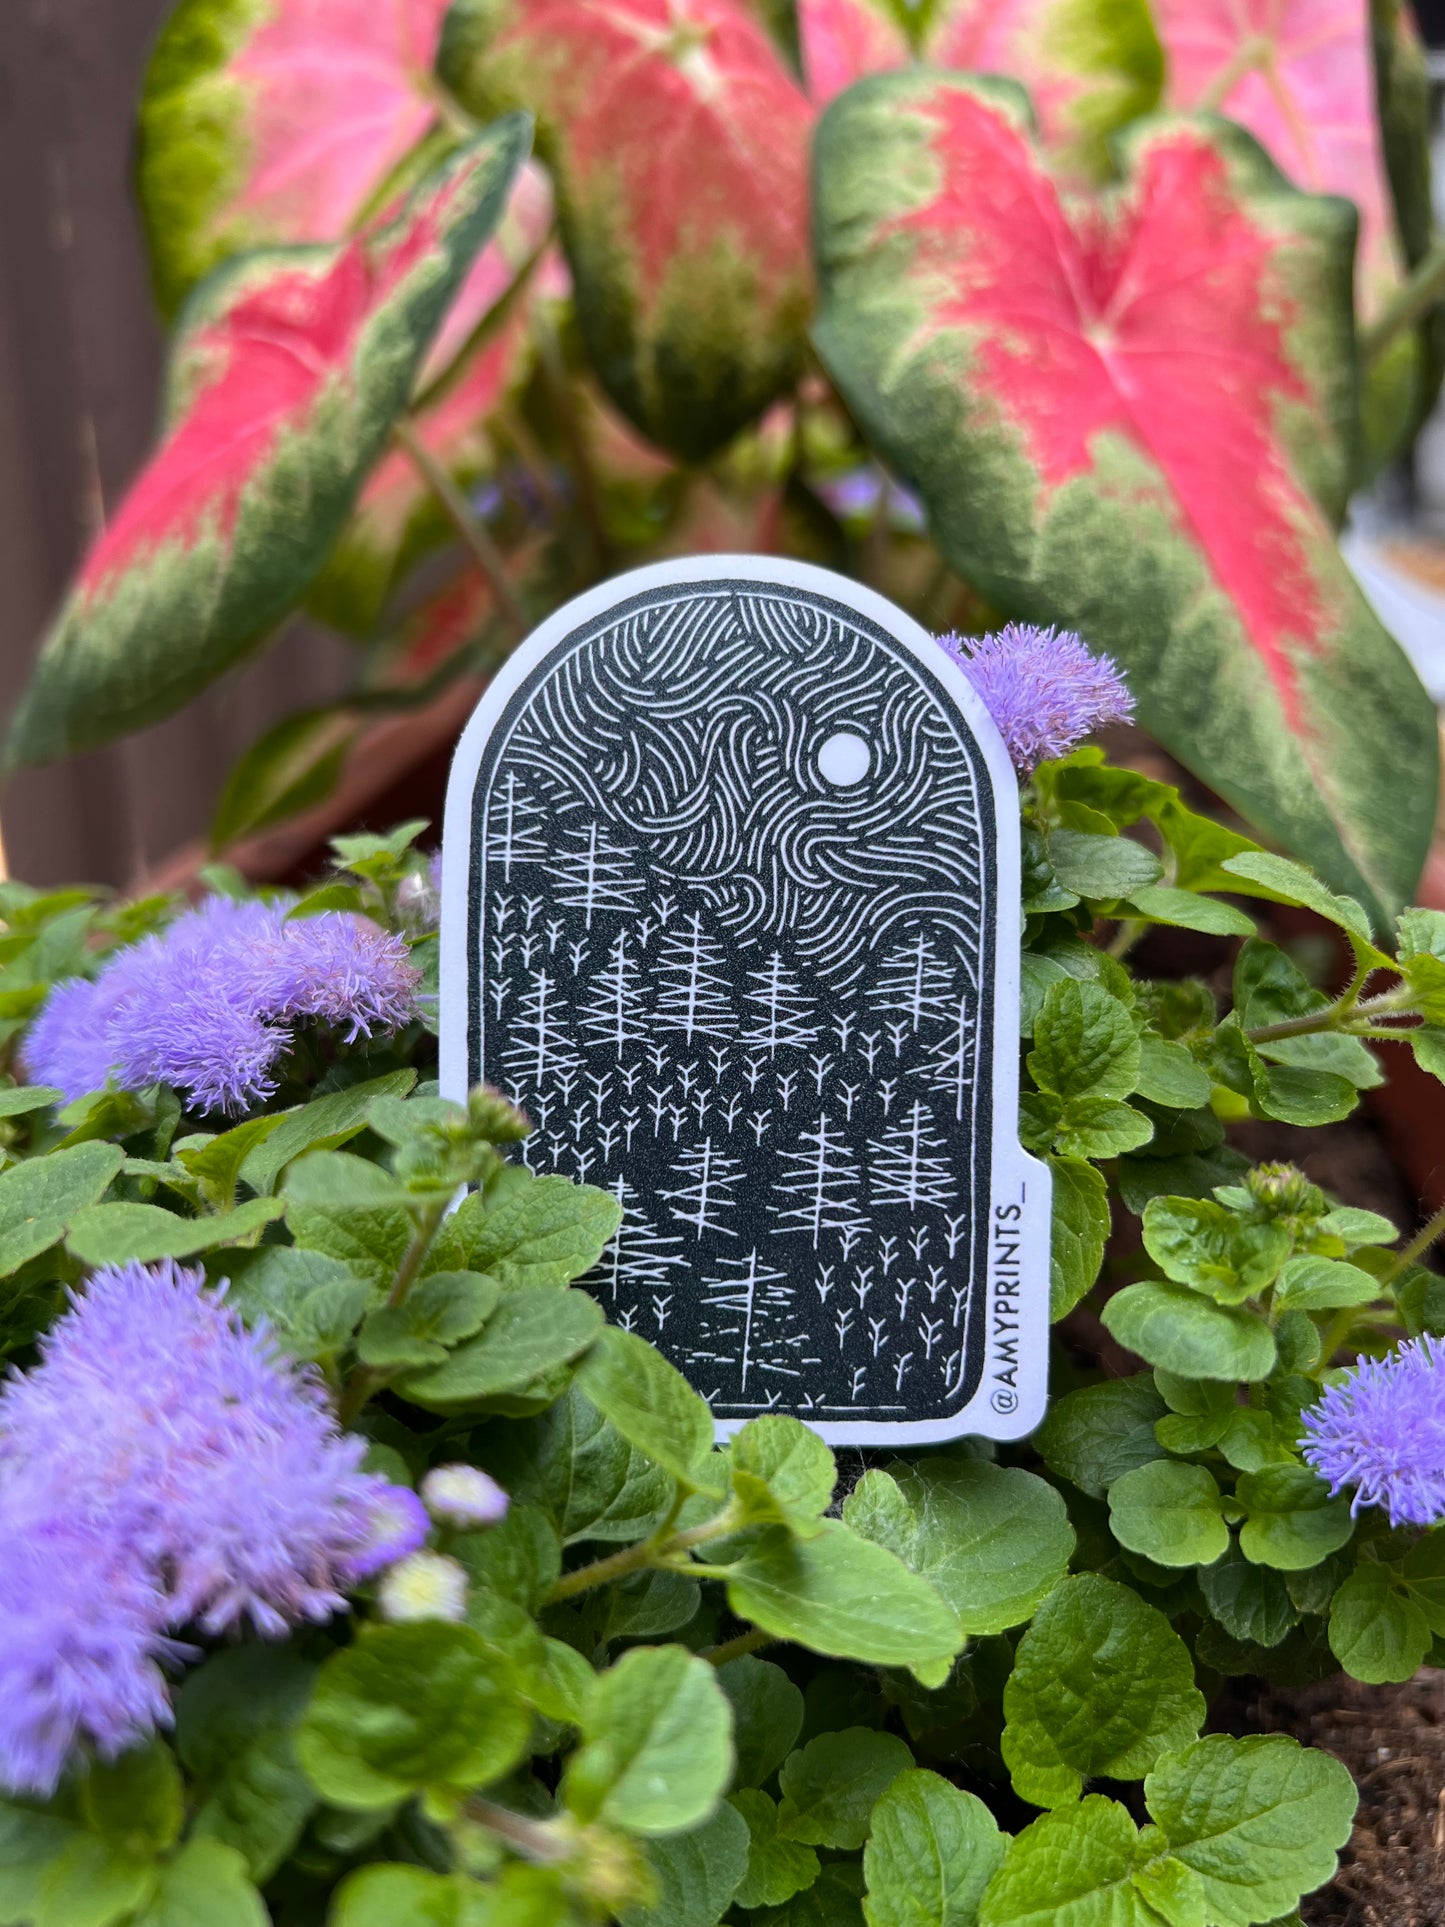 "Pine Wandering” 3 Inch Sticker | Linocut Block Print Eco-Friendly Sticker